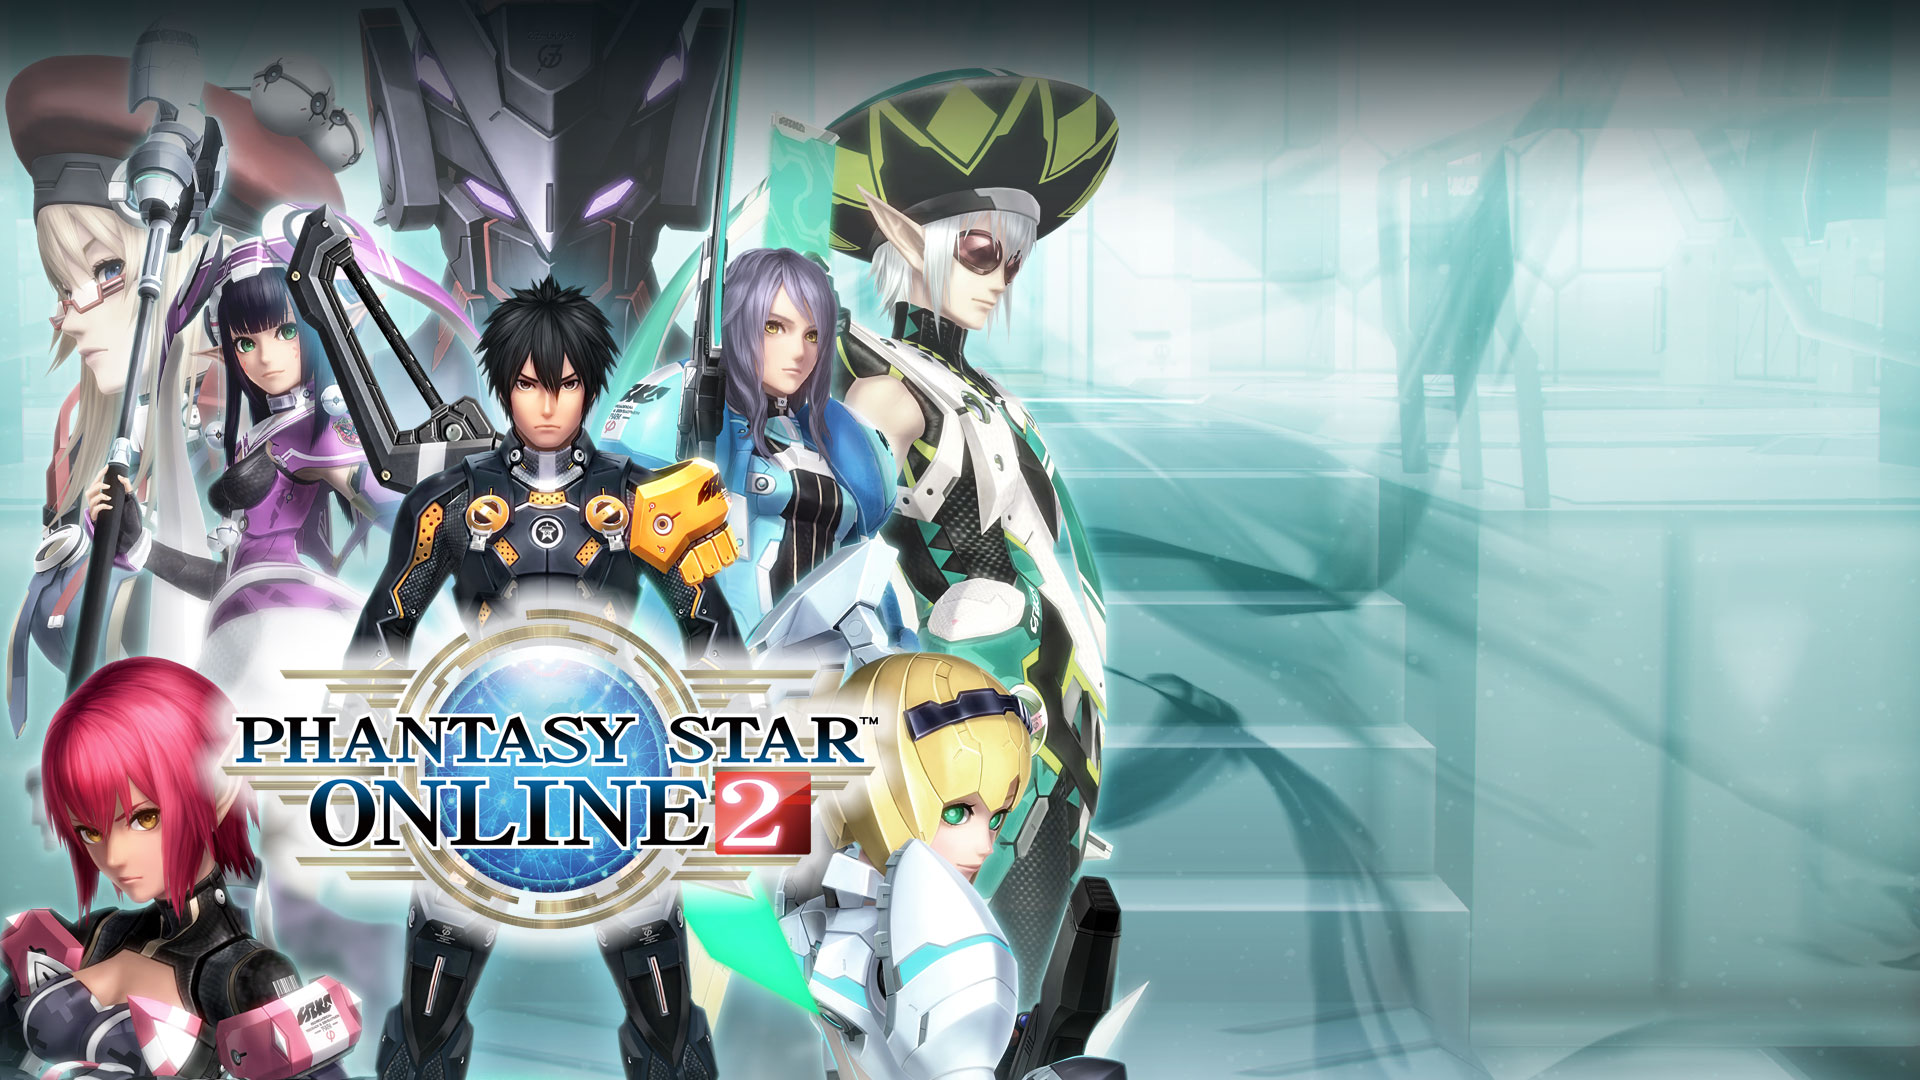 Phantasy Star Online 2, коллаж персонажей из игры.